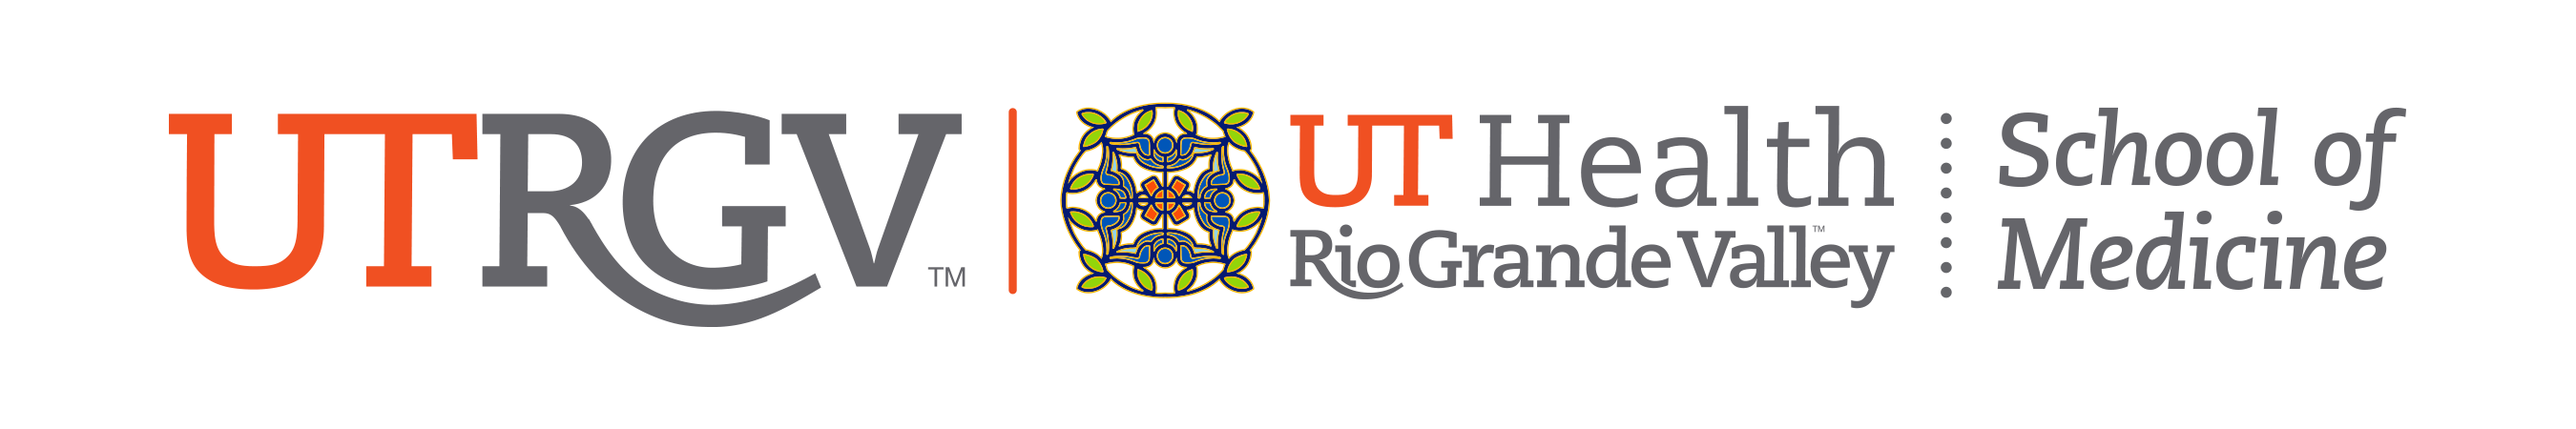 UTRGV - UT Health RGV - School of Medicine logo